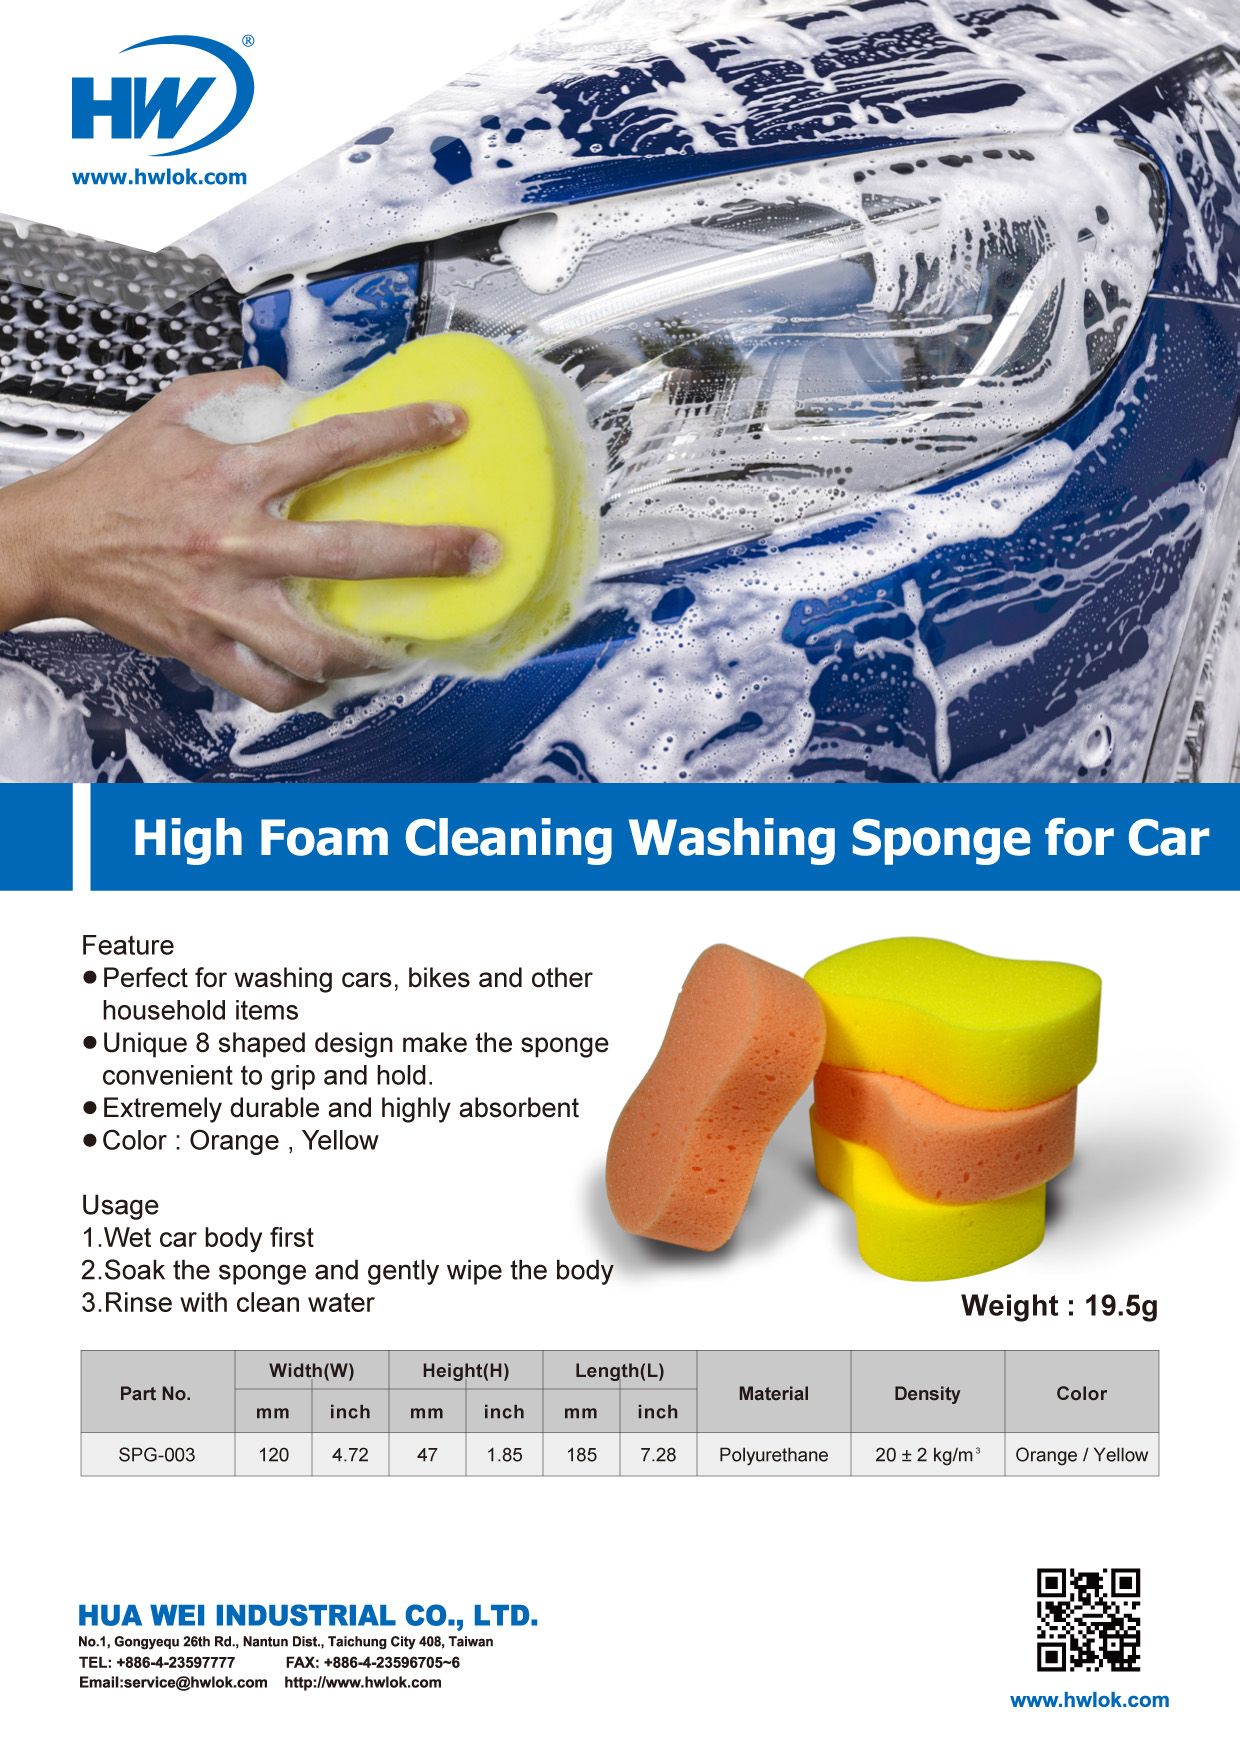 High Foam Cleaning Washing Sponge for Car-DM